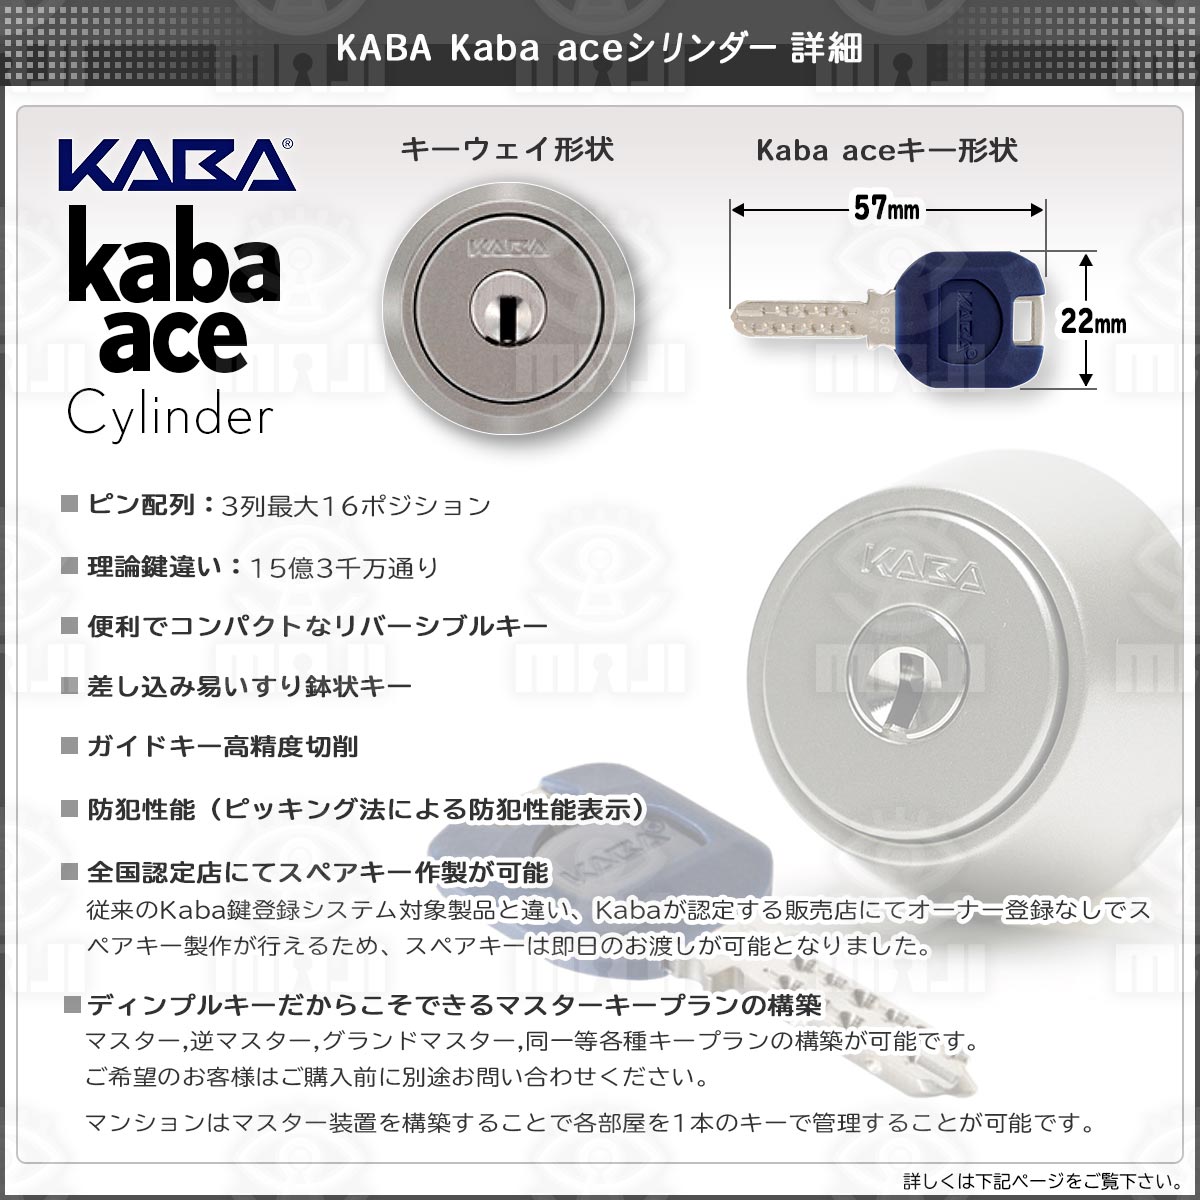 Kaba,ace カバエース3249 MIWA,美和ロック 75PM,PMK用シリンダー